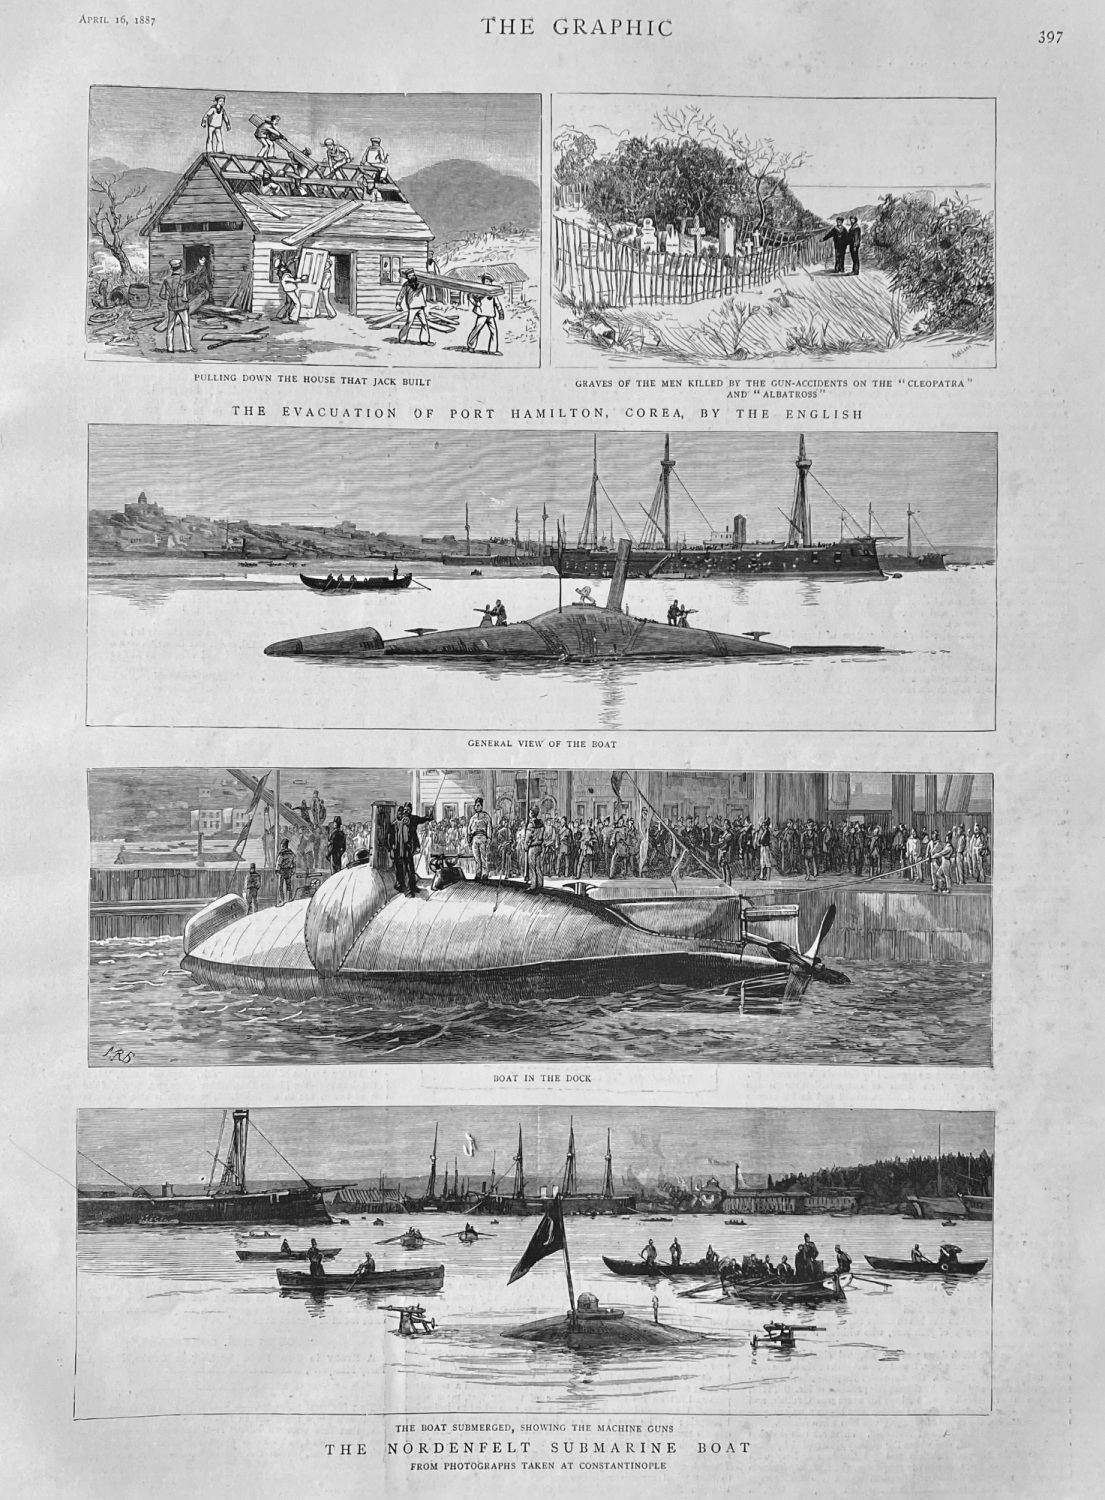 The Nordenfelt Submarine Boat. 1887.